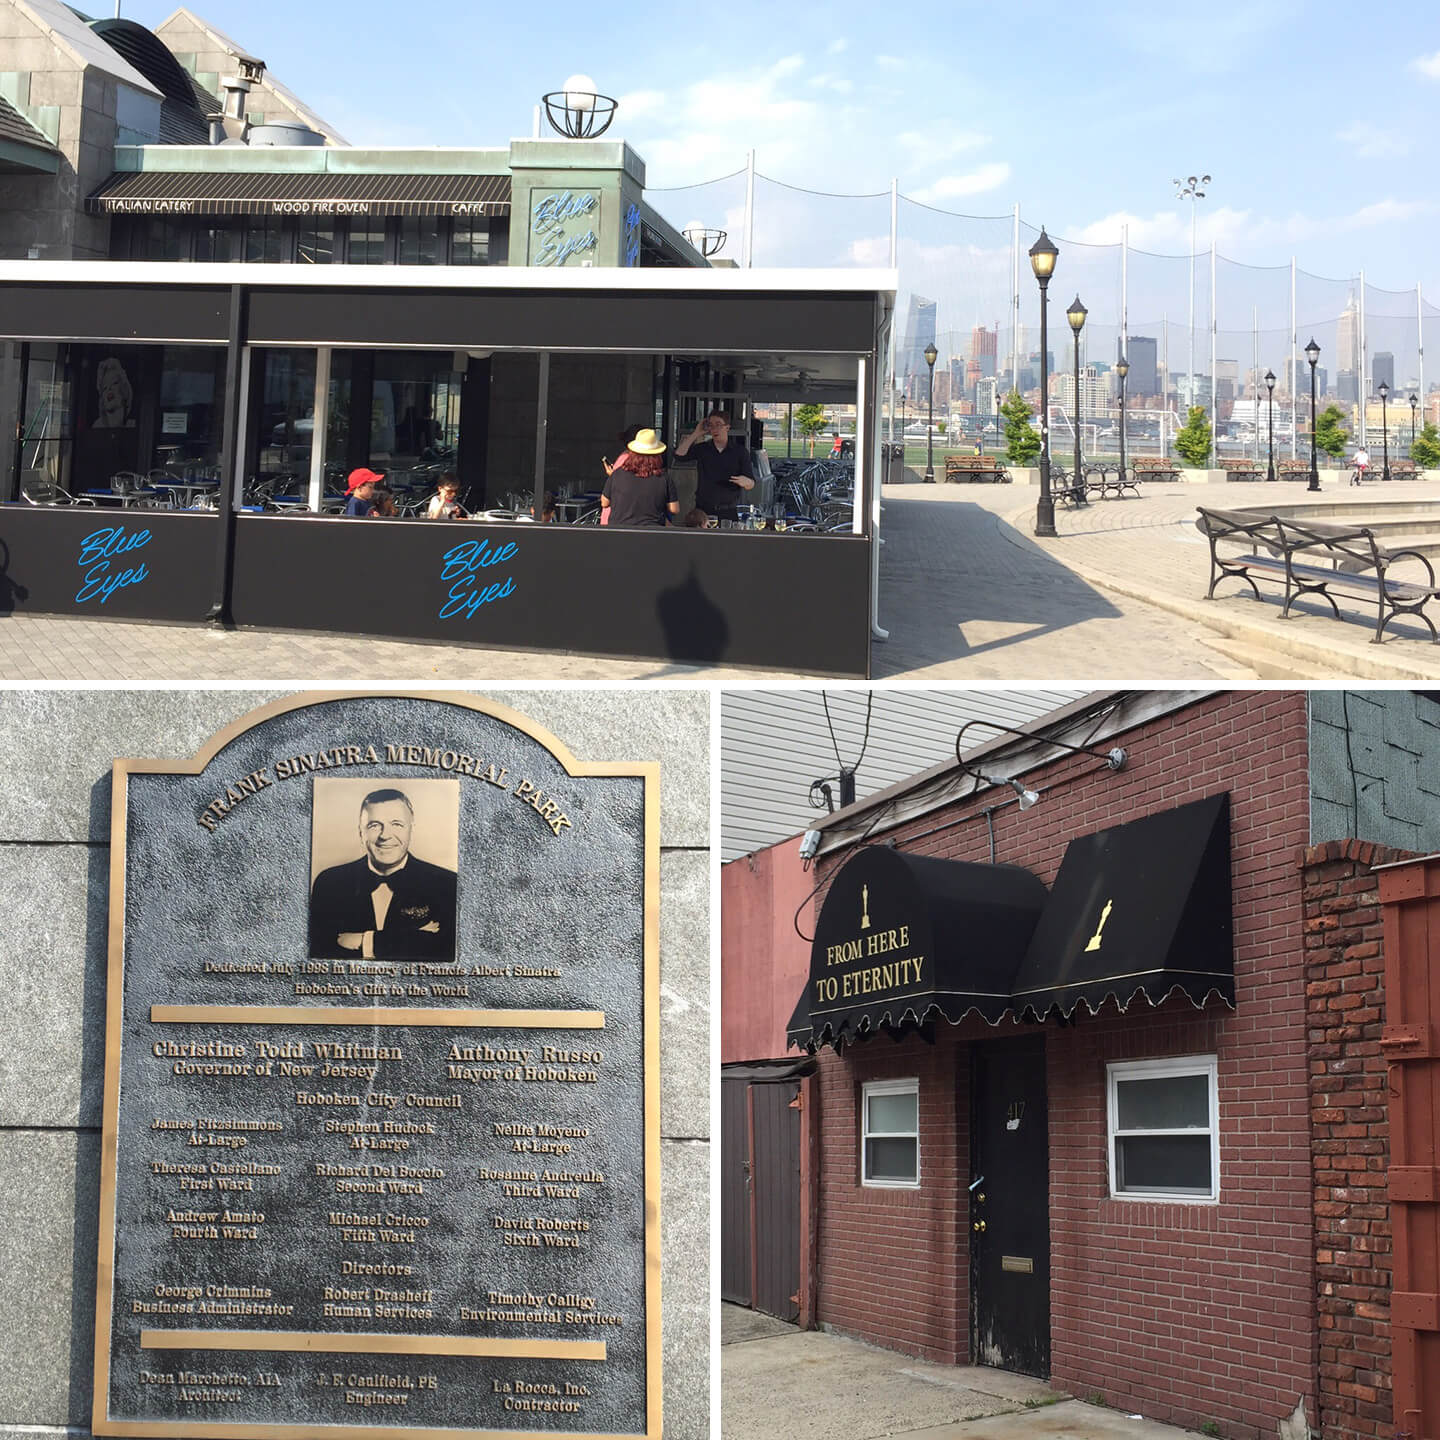 Frank Sinatra Park hoboken birthplace